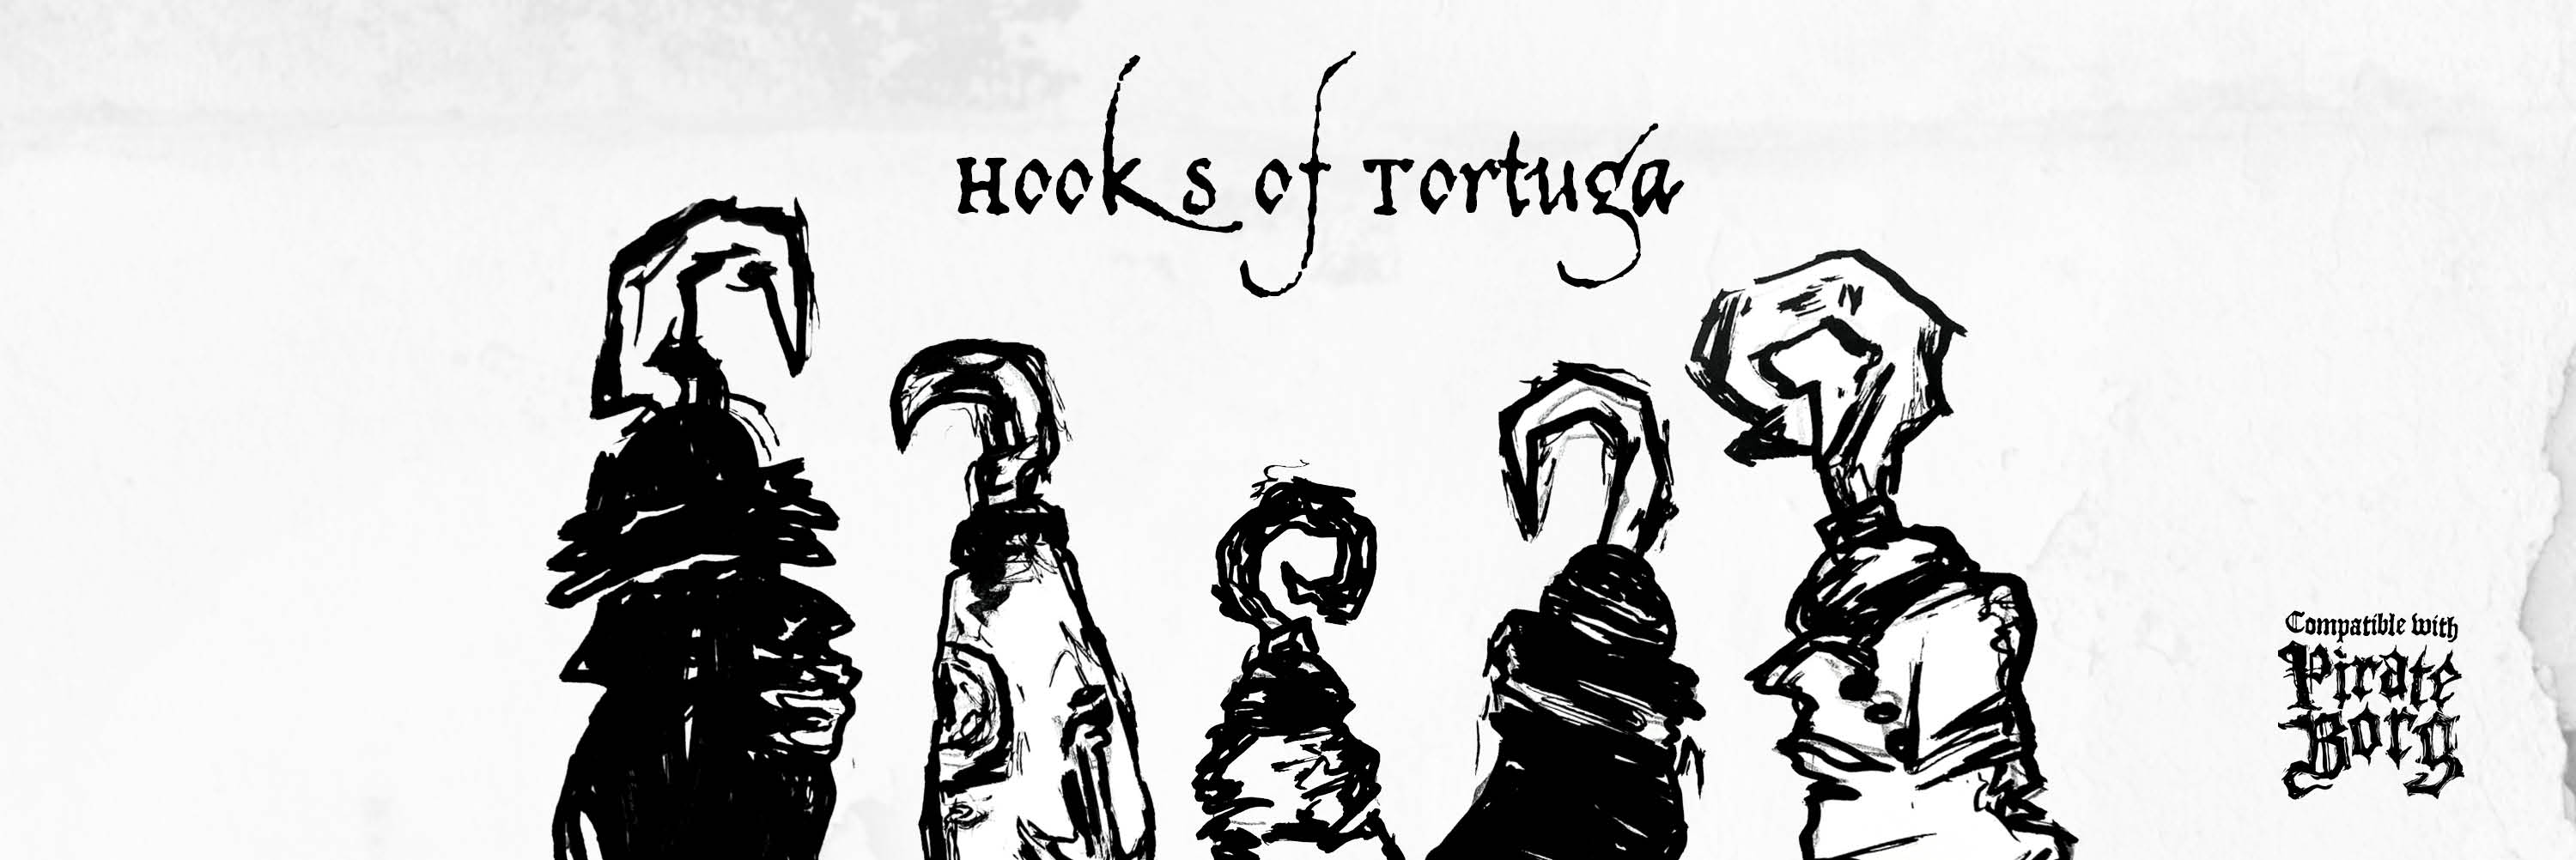 Hooks of Tortuga